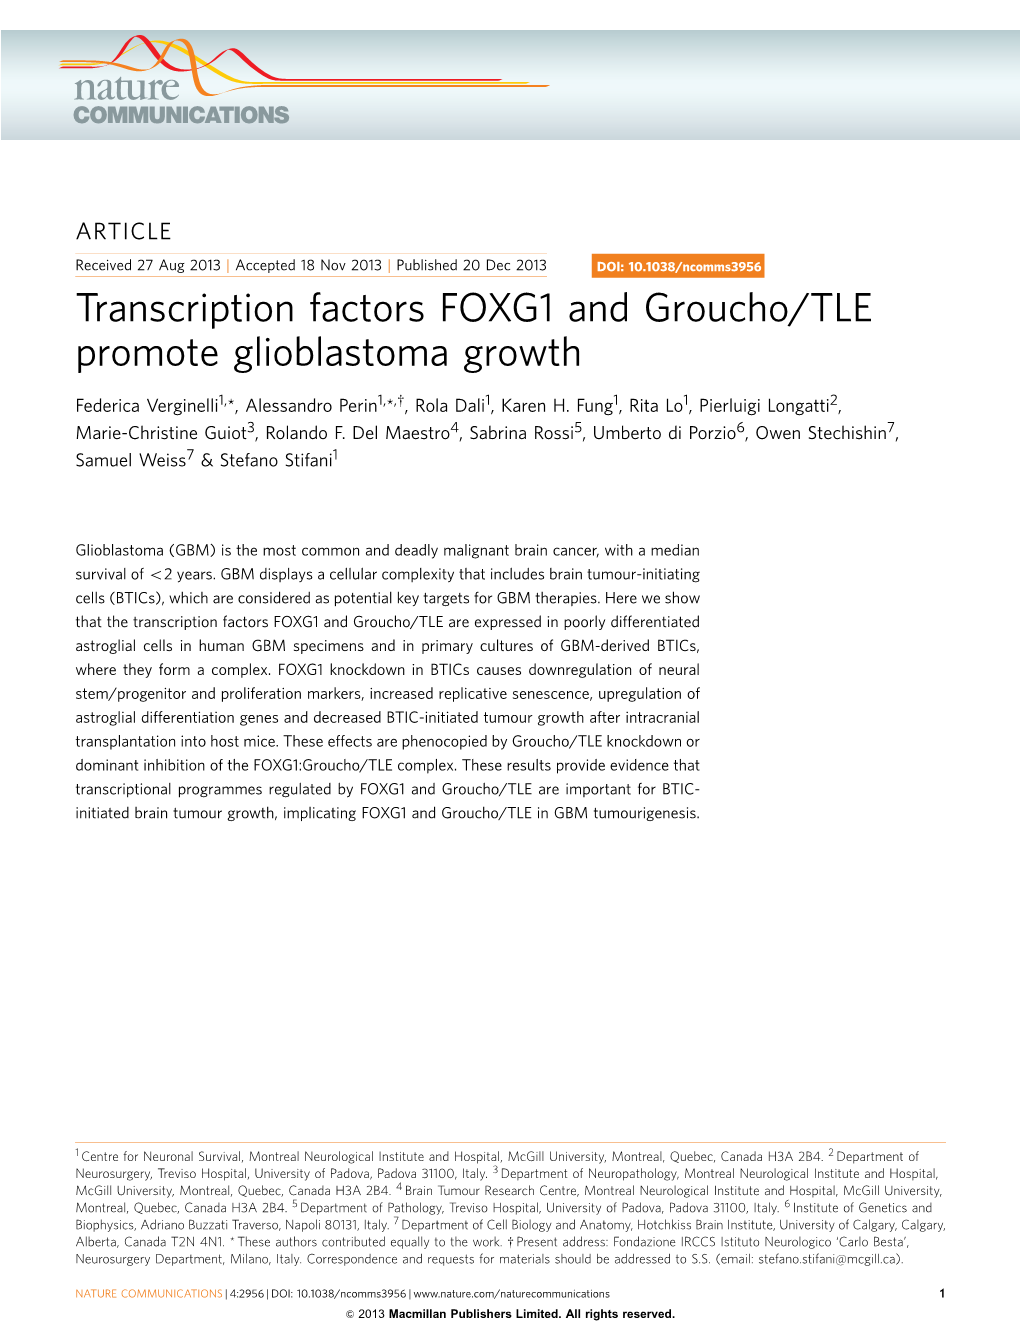 Transcription Factors FOXG1 and Groucho/TLE Promote Glioblastoma Growth